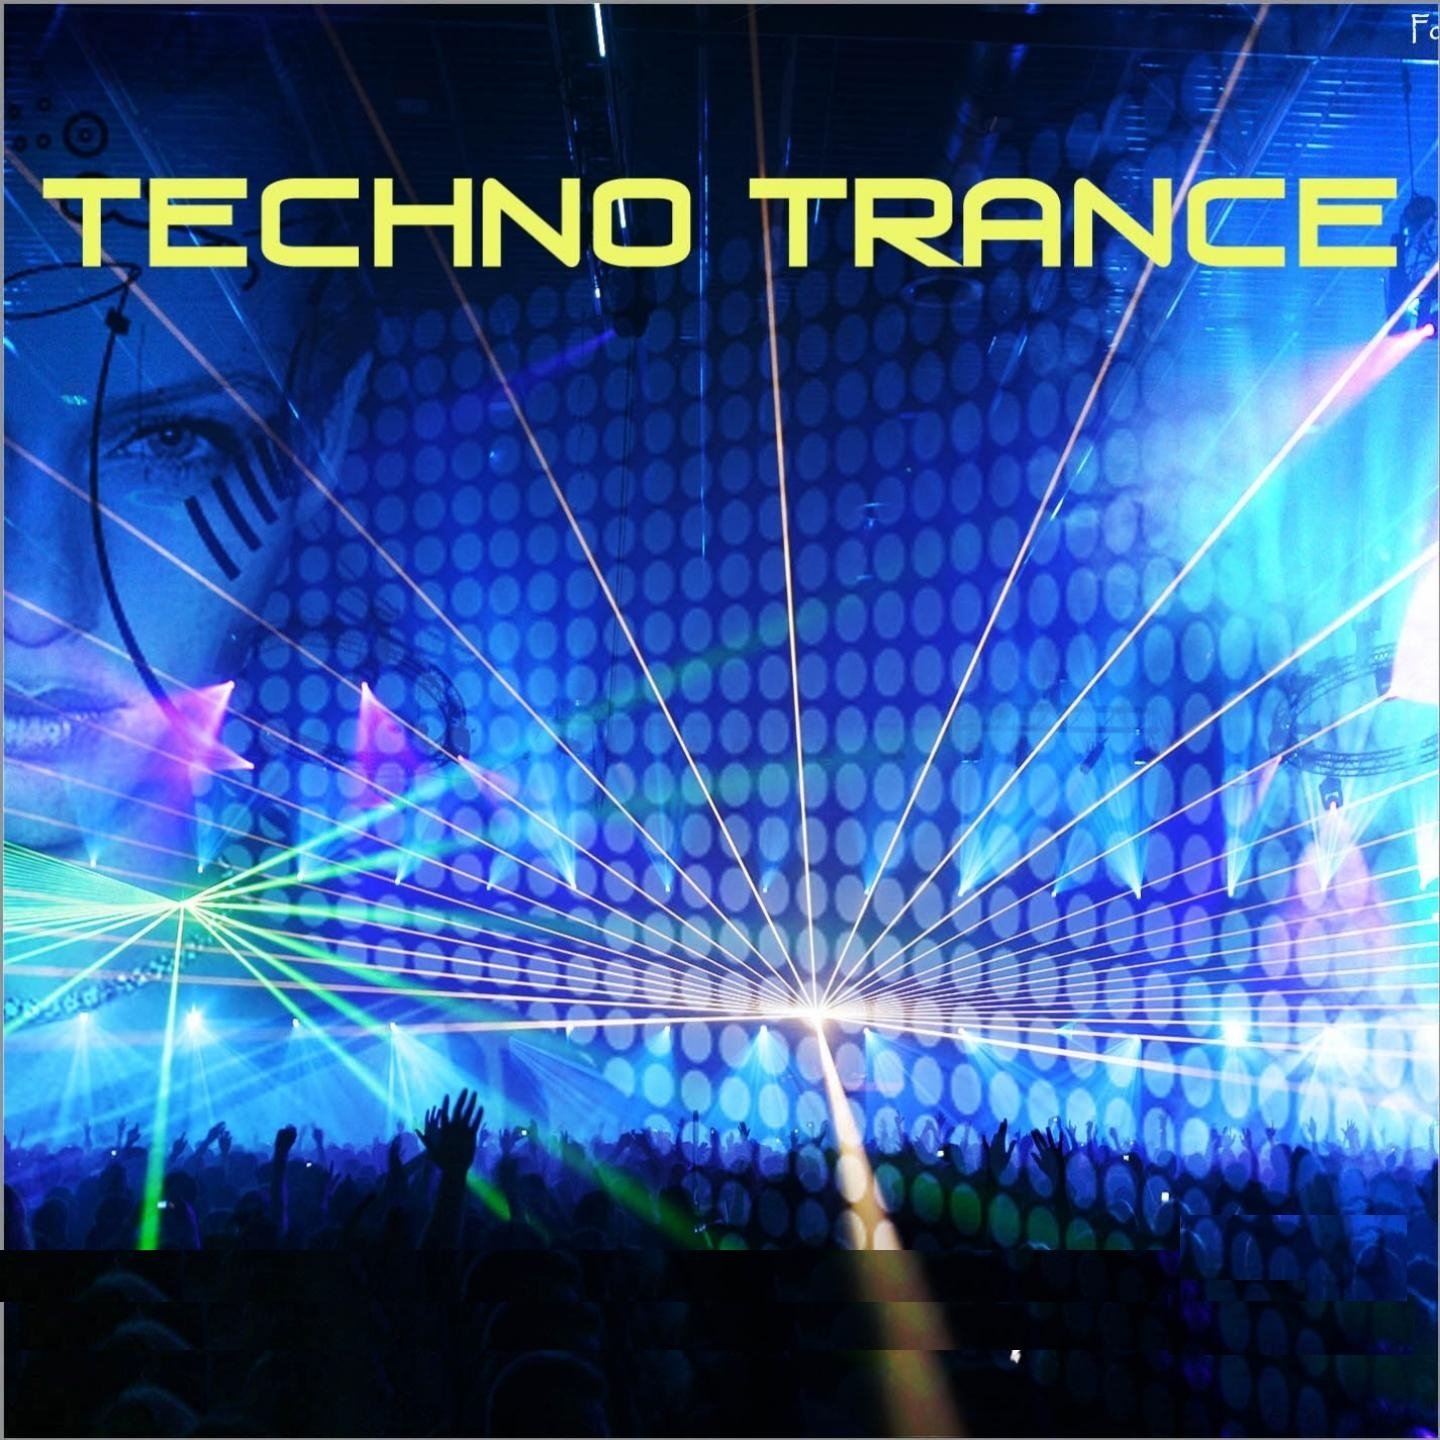 Топовый транс. Techno Trance. Trance обложка. Trance обложки альбомов. Tech Trance обложка.